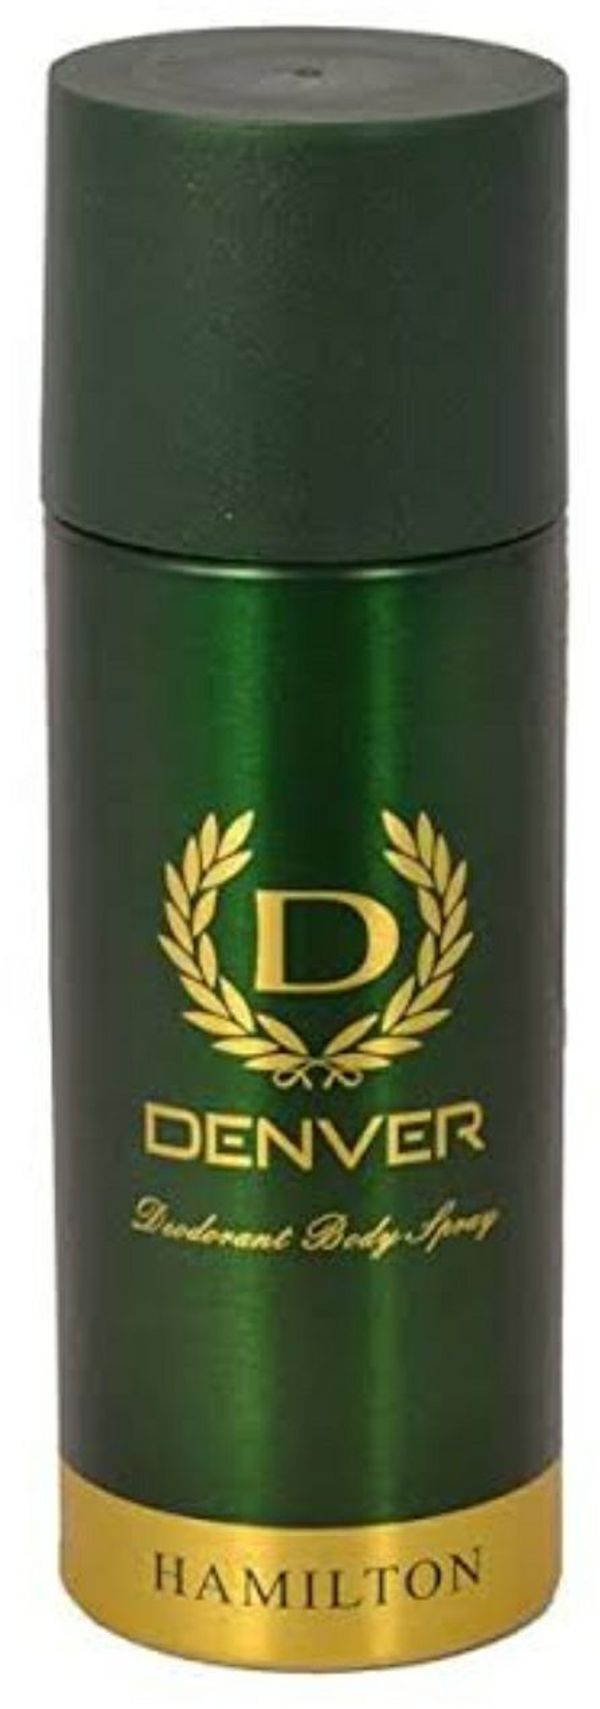 DENVER HEMILTON Deodorant Body Spray Hamilton for Men, 165ml - HEMILTON